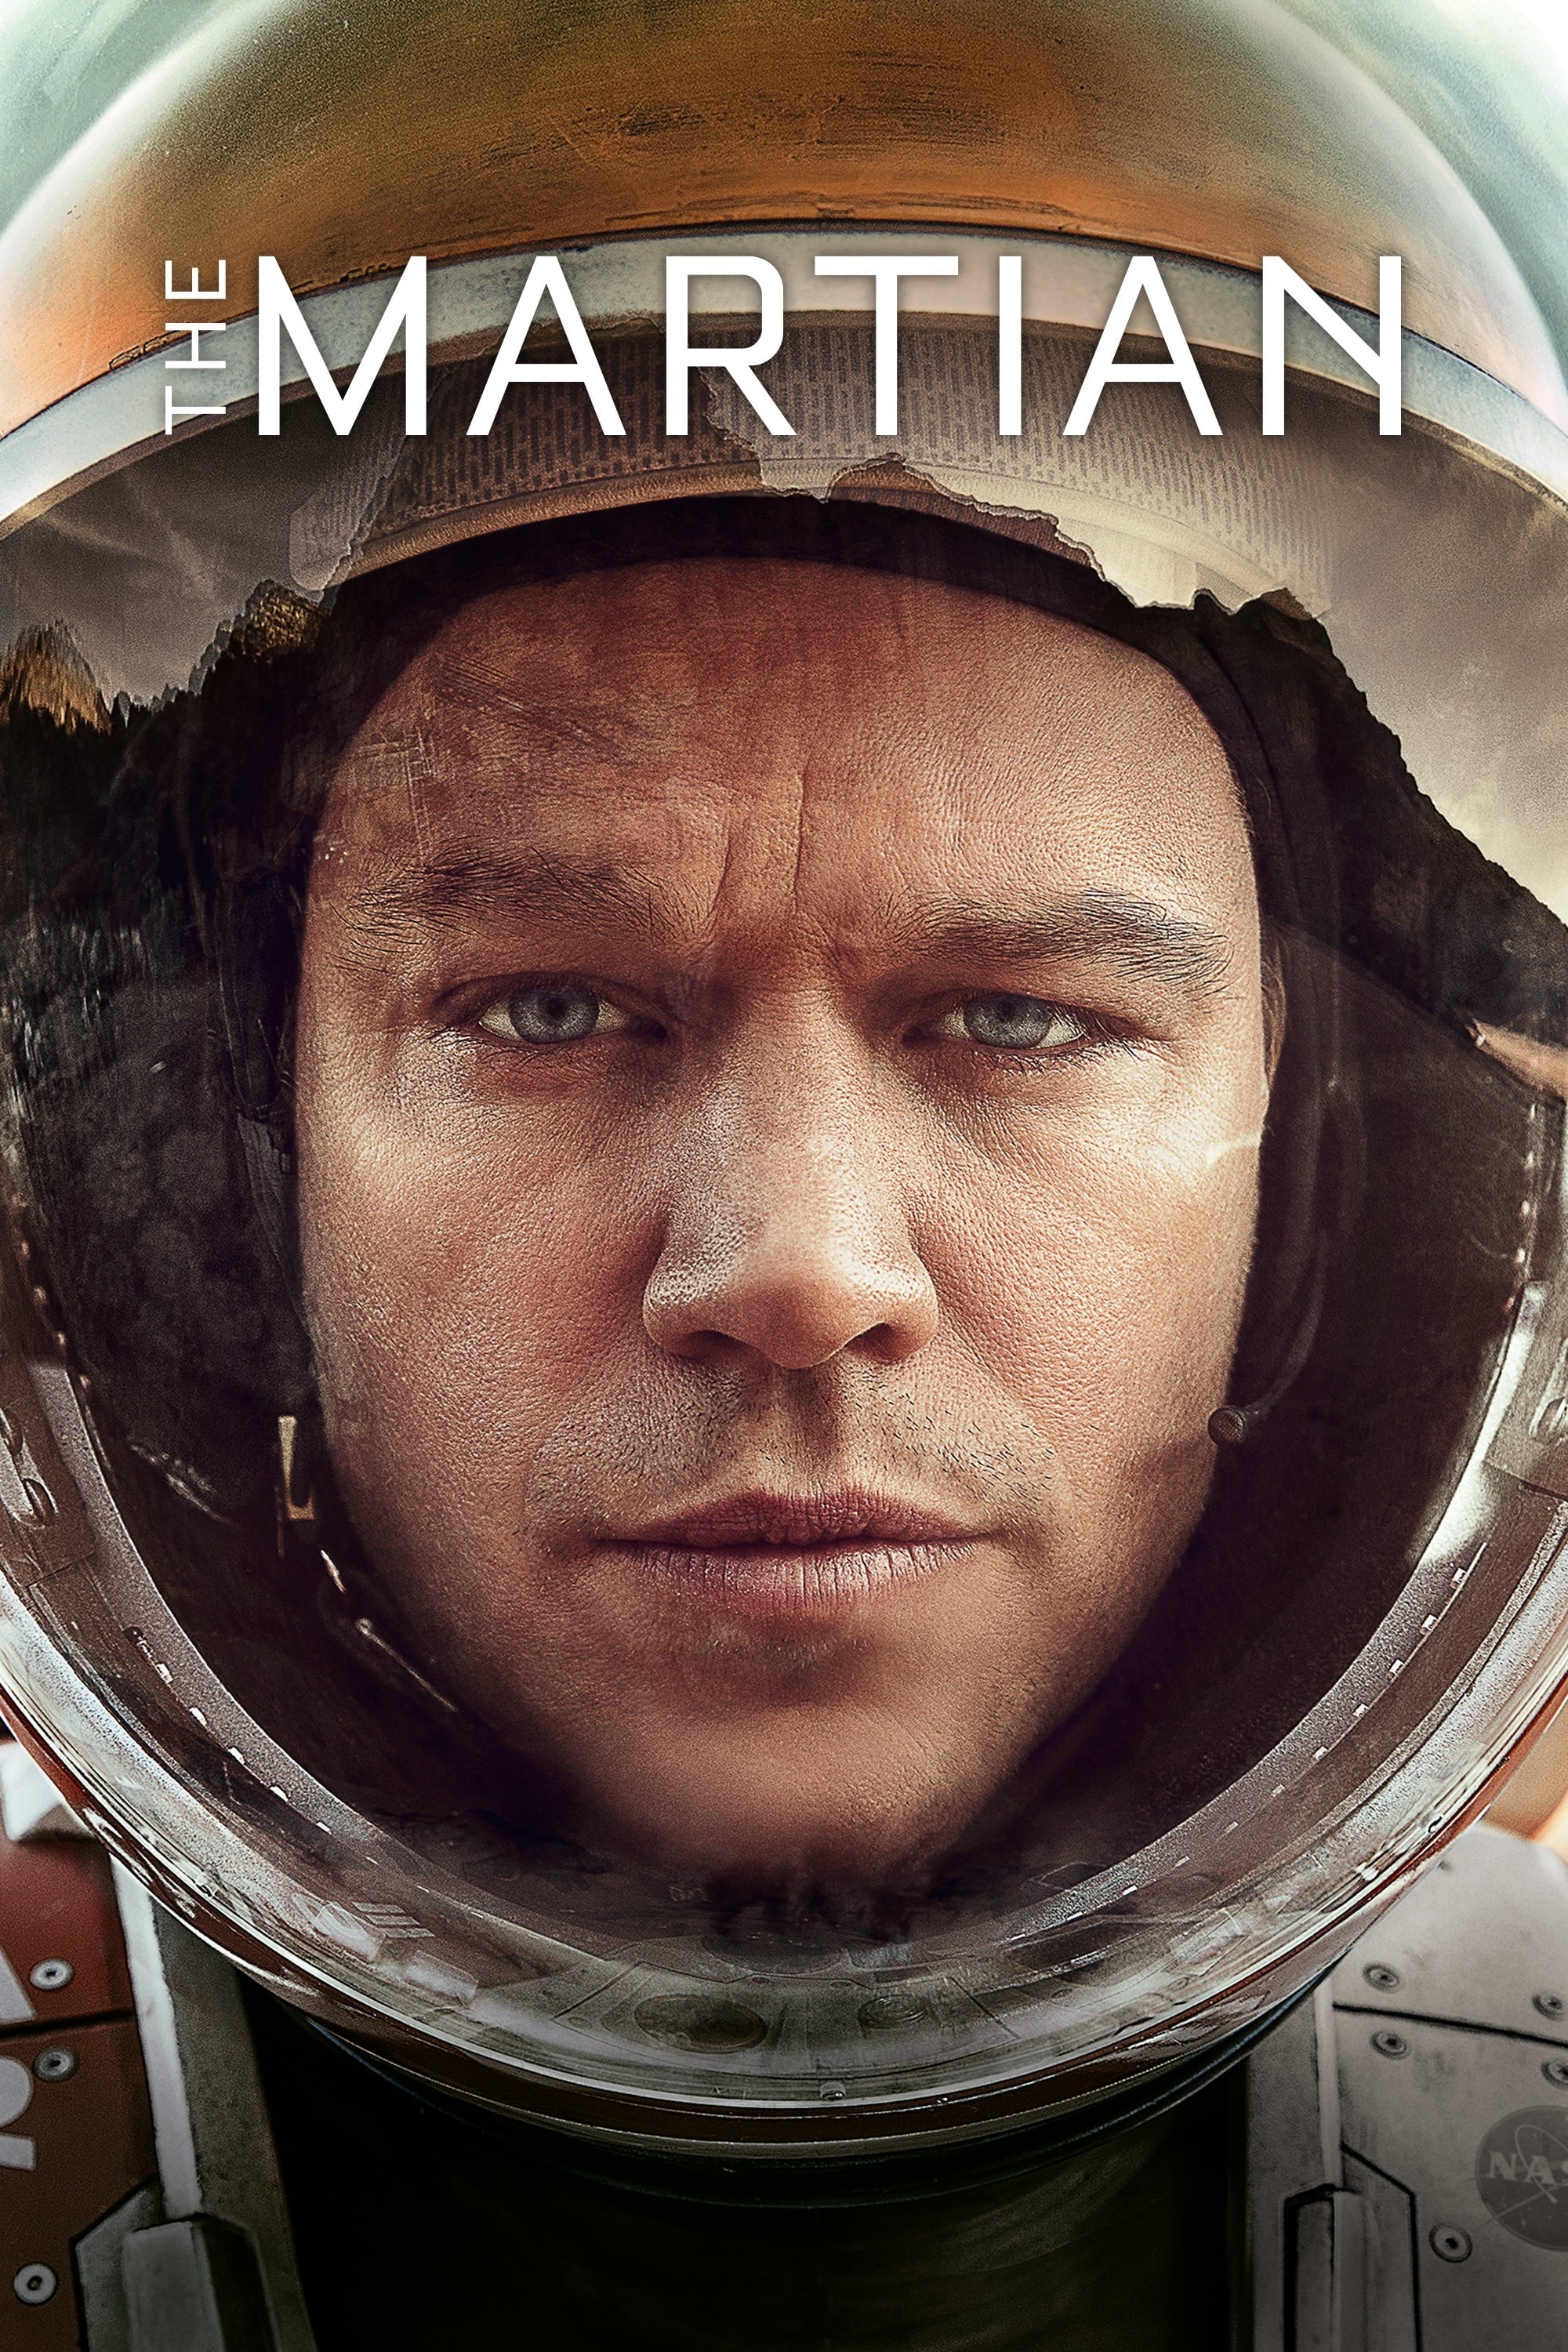 Marte (The Martian) (2015)